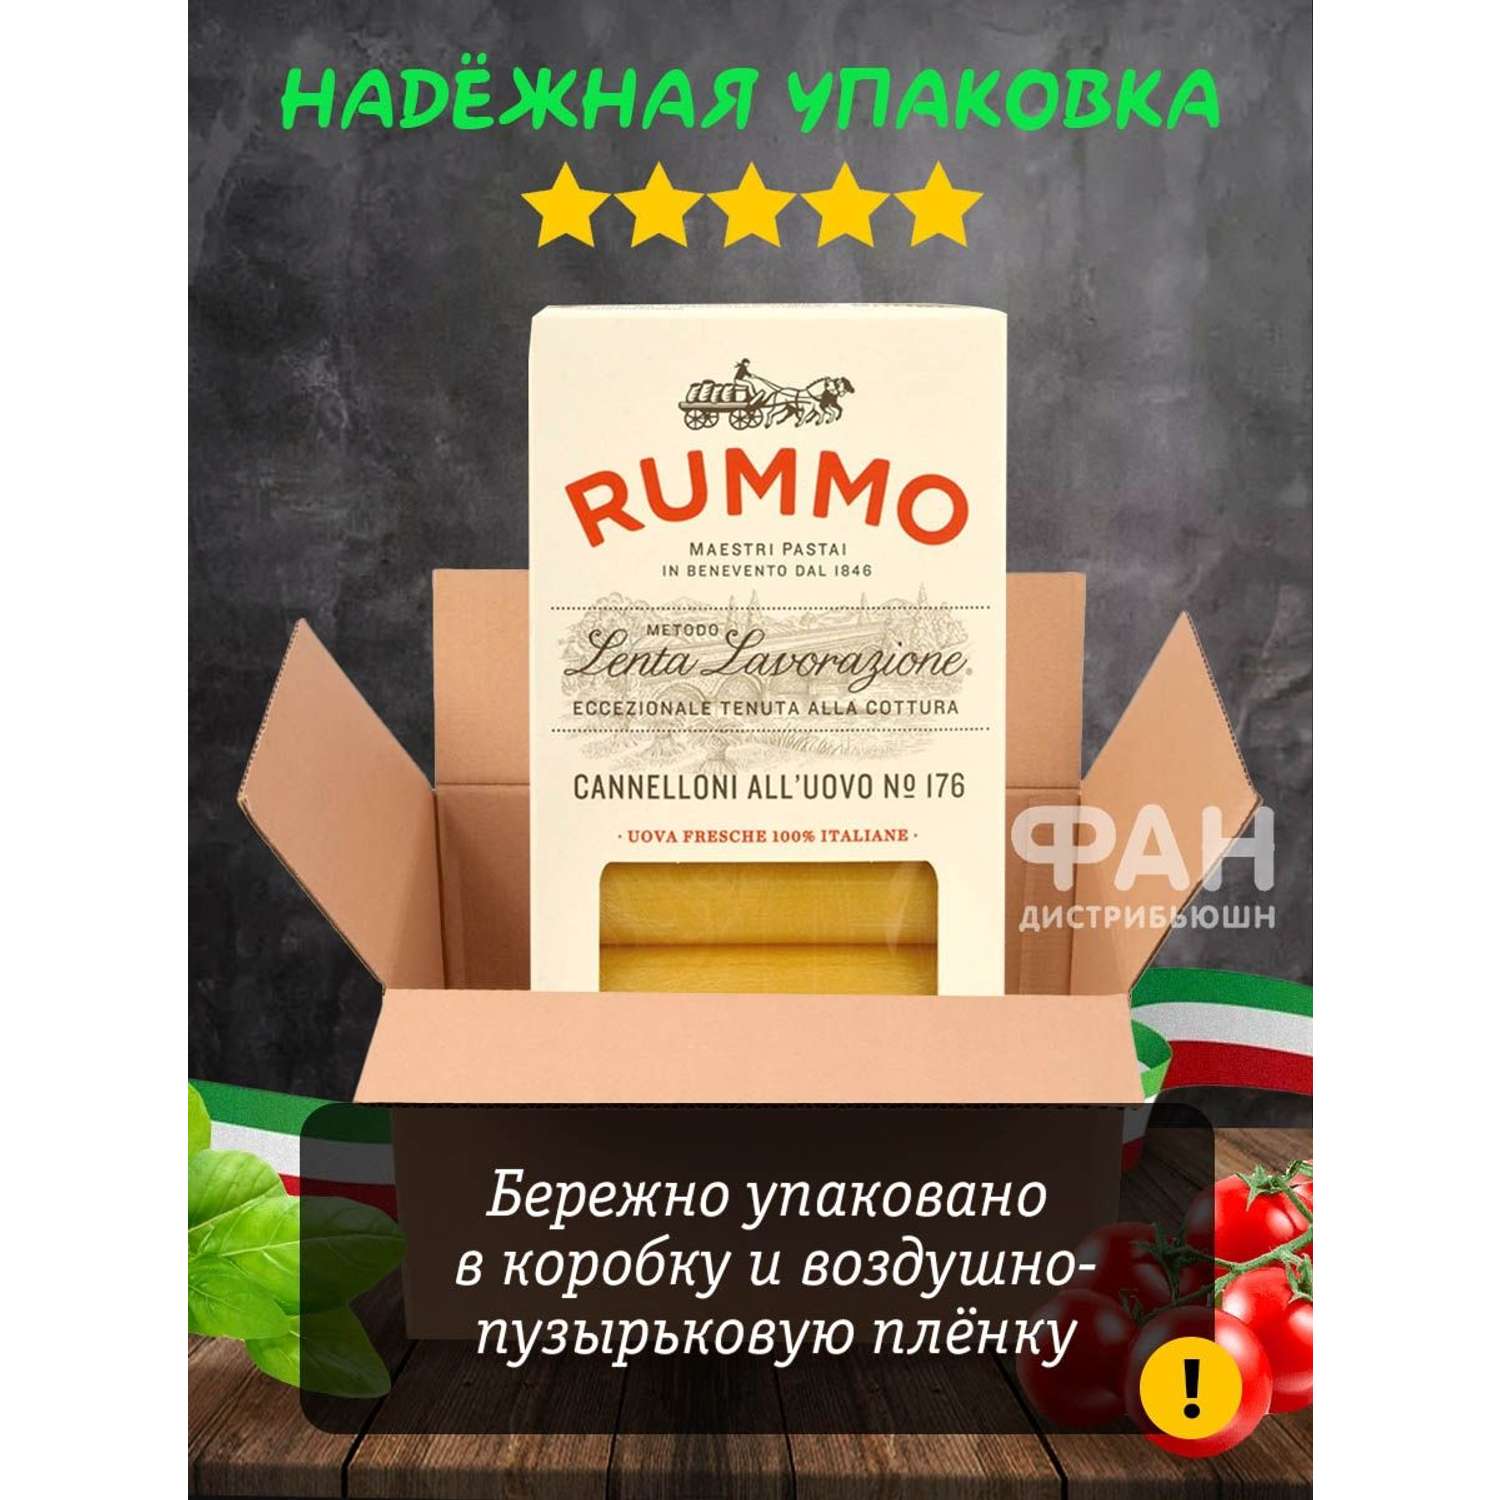 Макароны Rummo Каннеллоне 176 3 упаковки по 250 г - фото 10